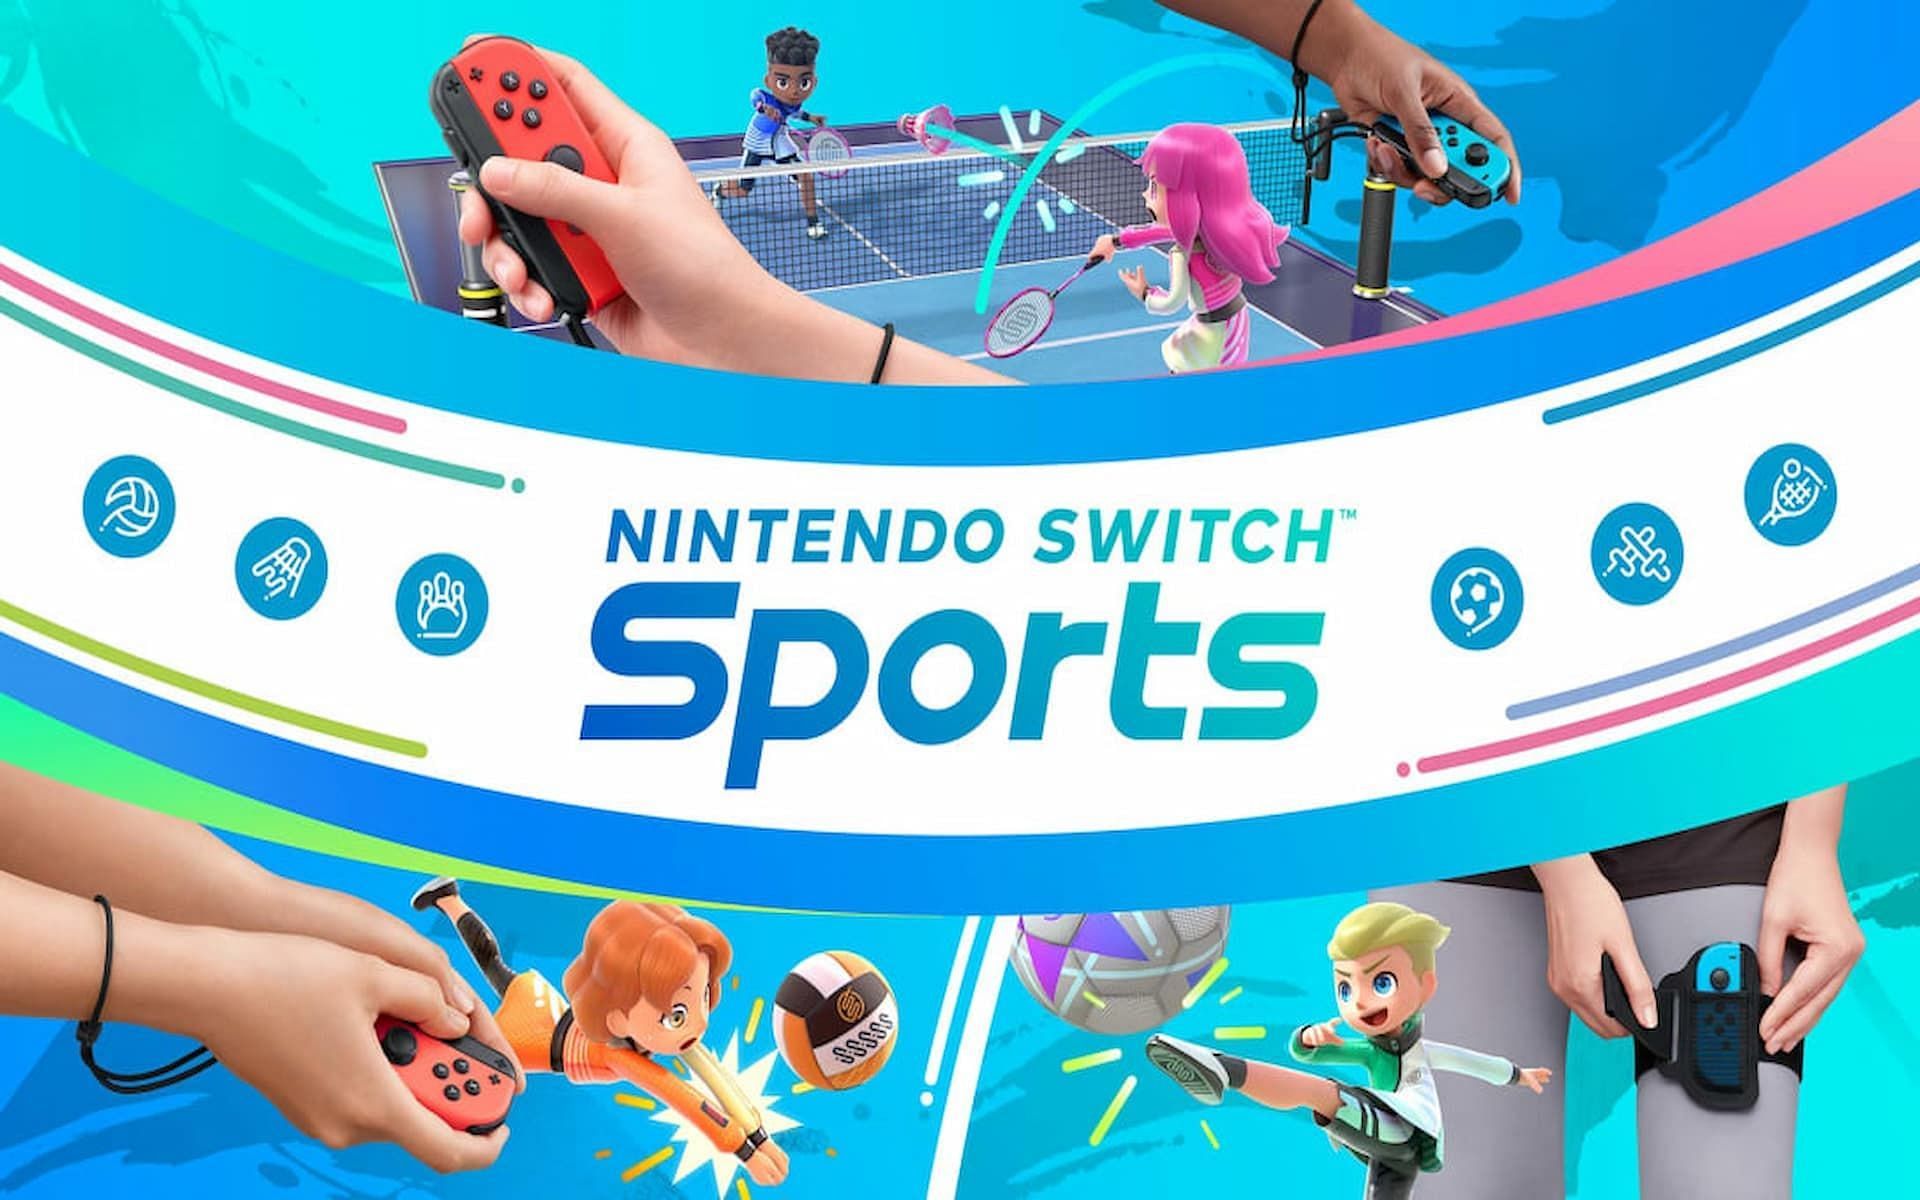 The promotional image for Nintendo Switch Sports (Image via Nintendo)